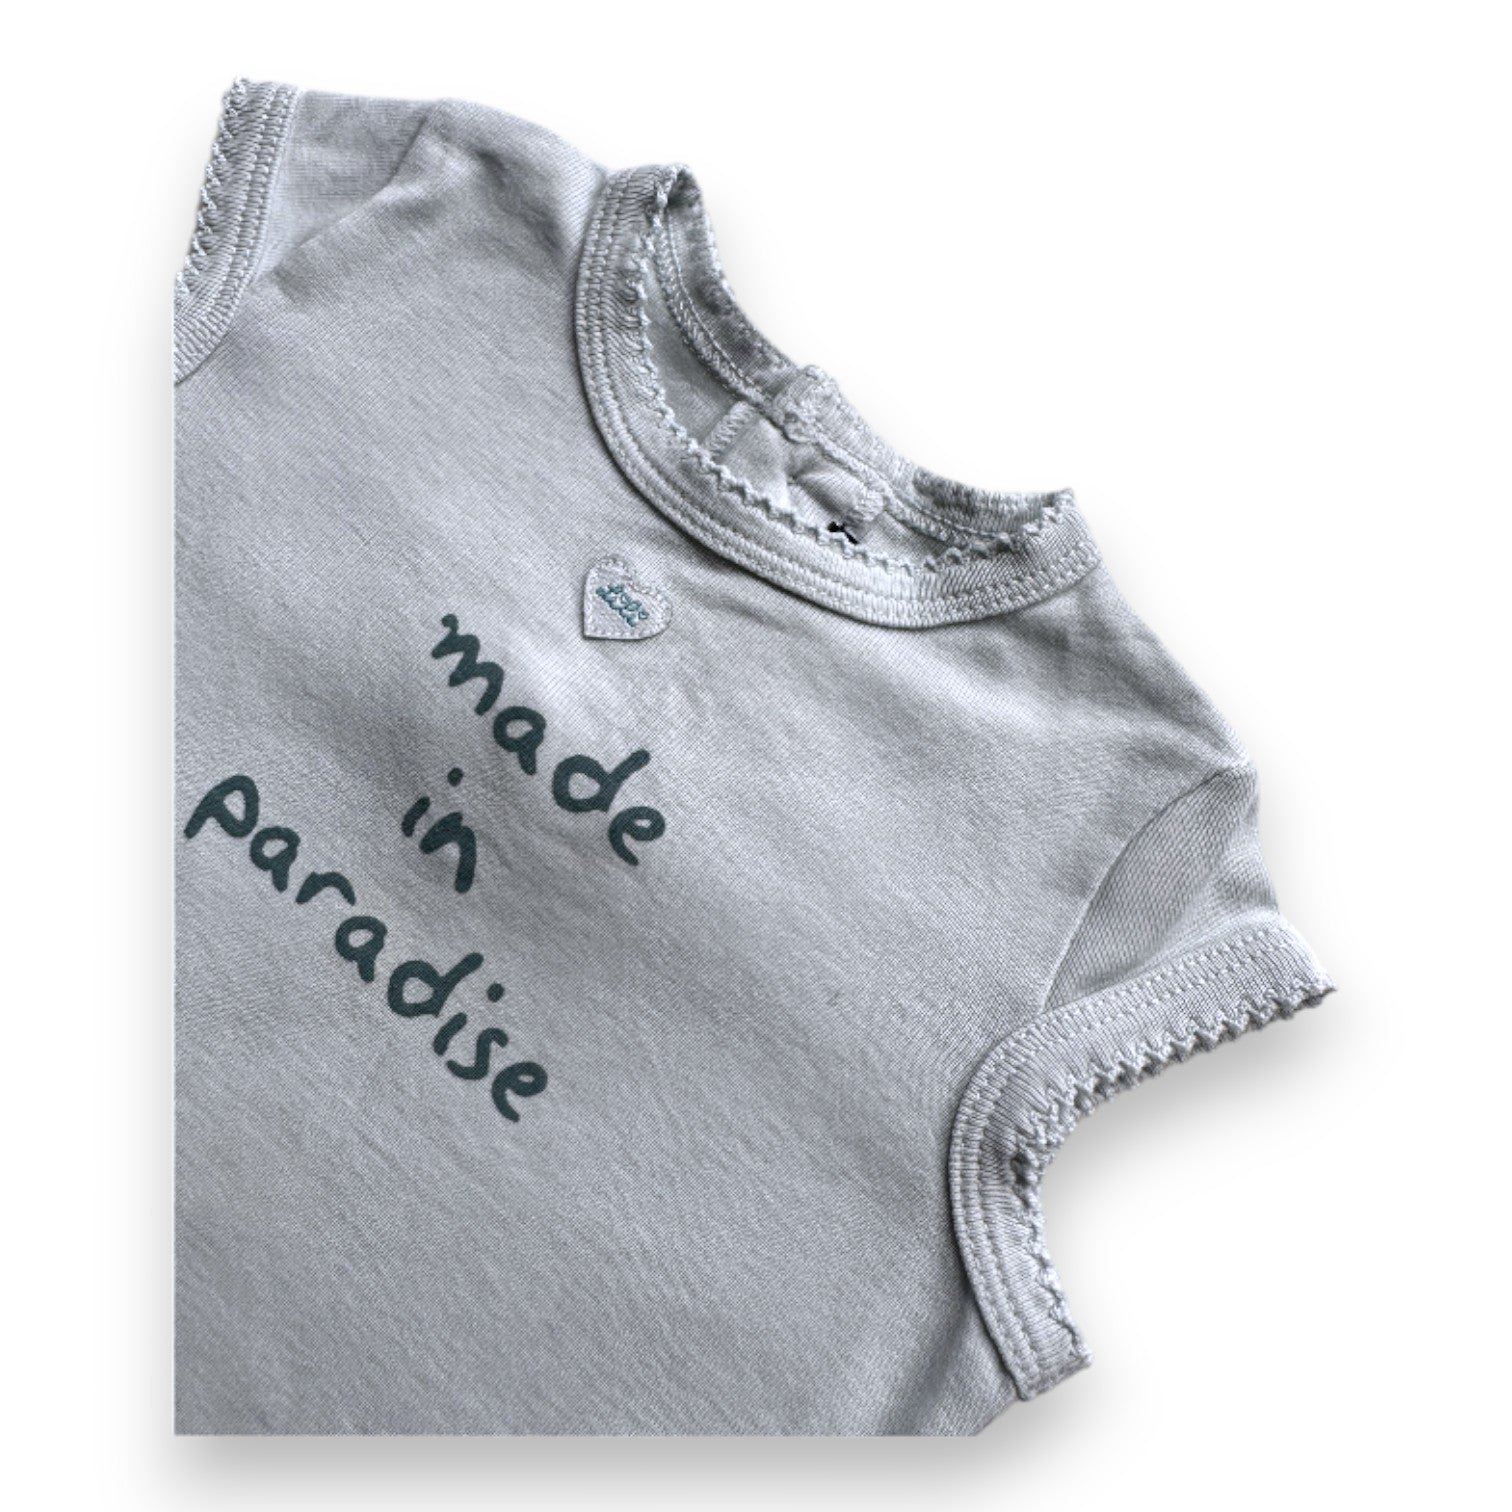 LILI GAUFRETTE - T-shirt bleu "Made in paradise" - 12 mois